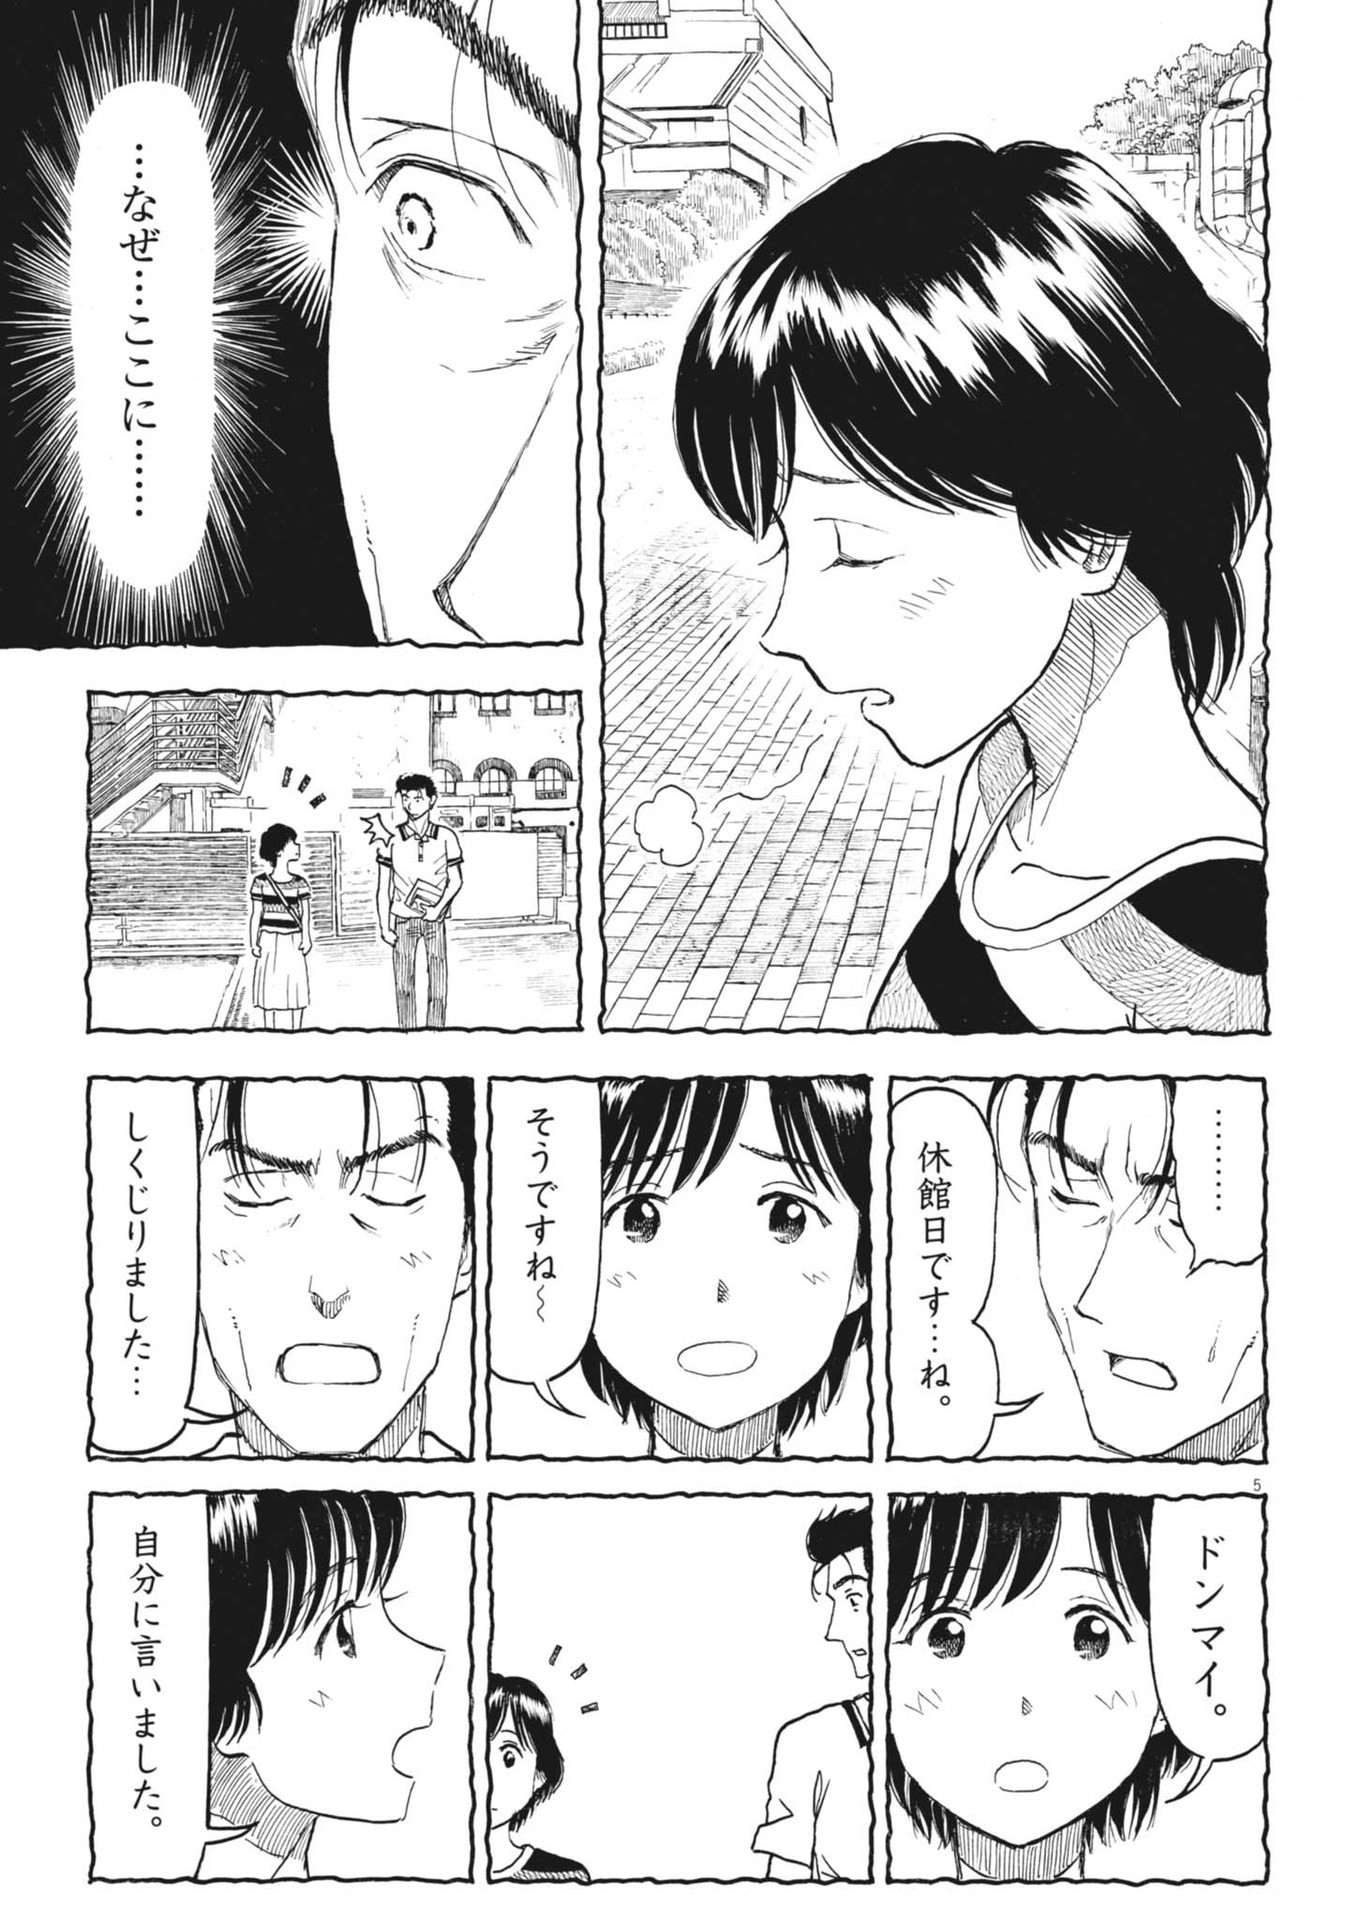 Komegura Fuufu no Recipe-chou - Chapter 39 - Page 5